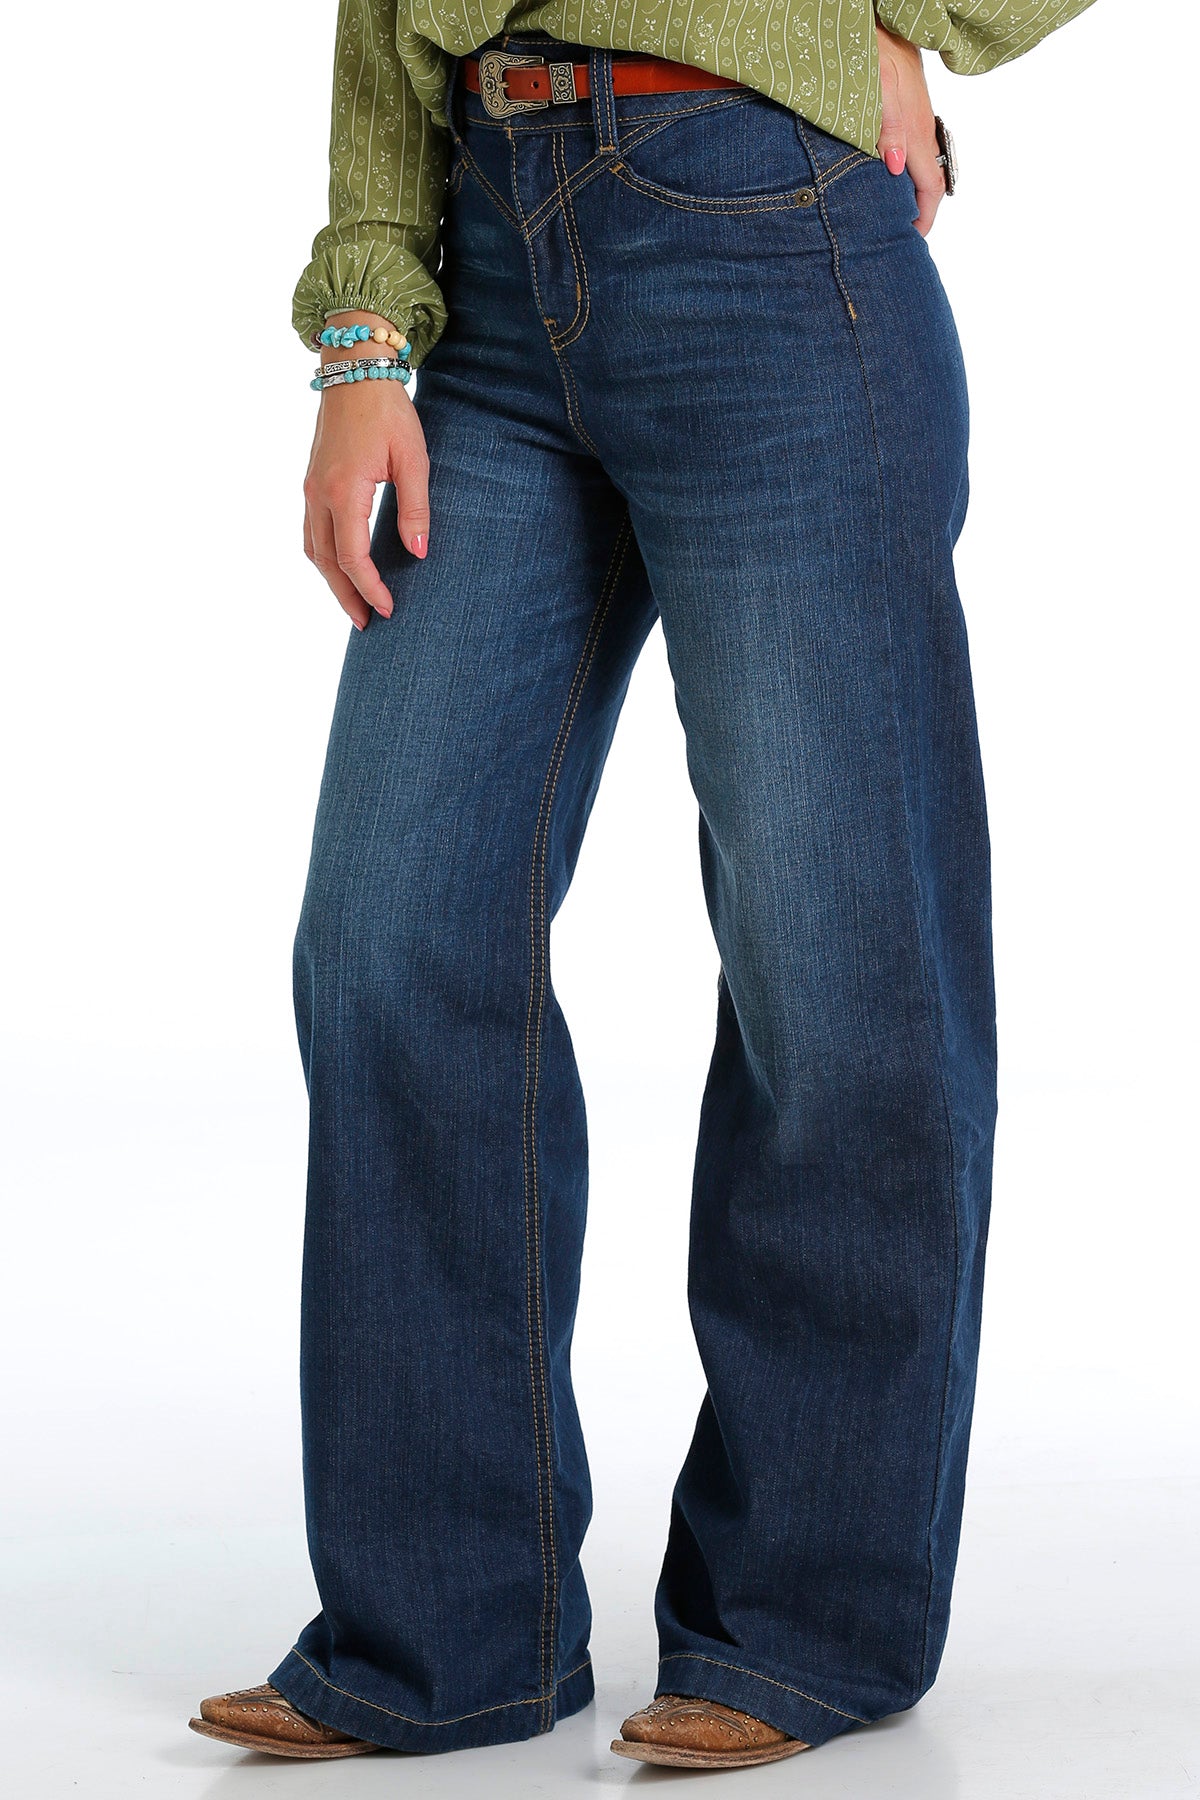 Women's Wide Leg Fashion Fit Jeans